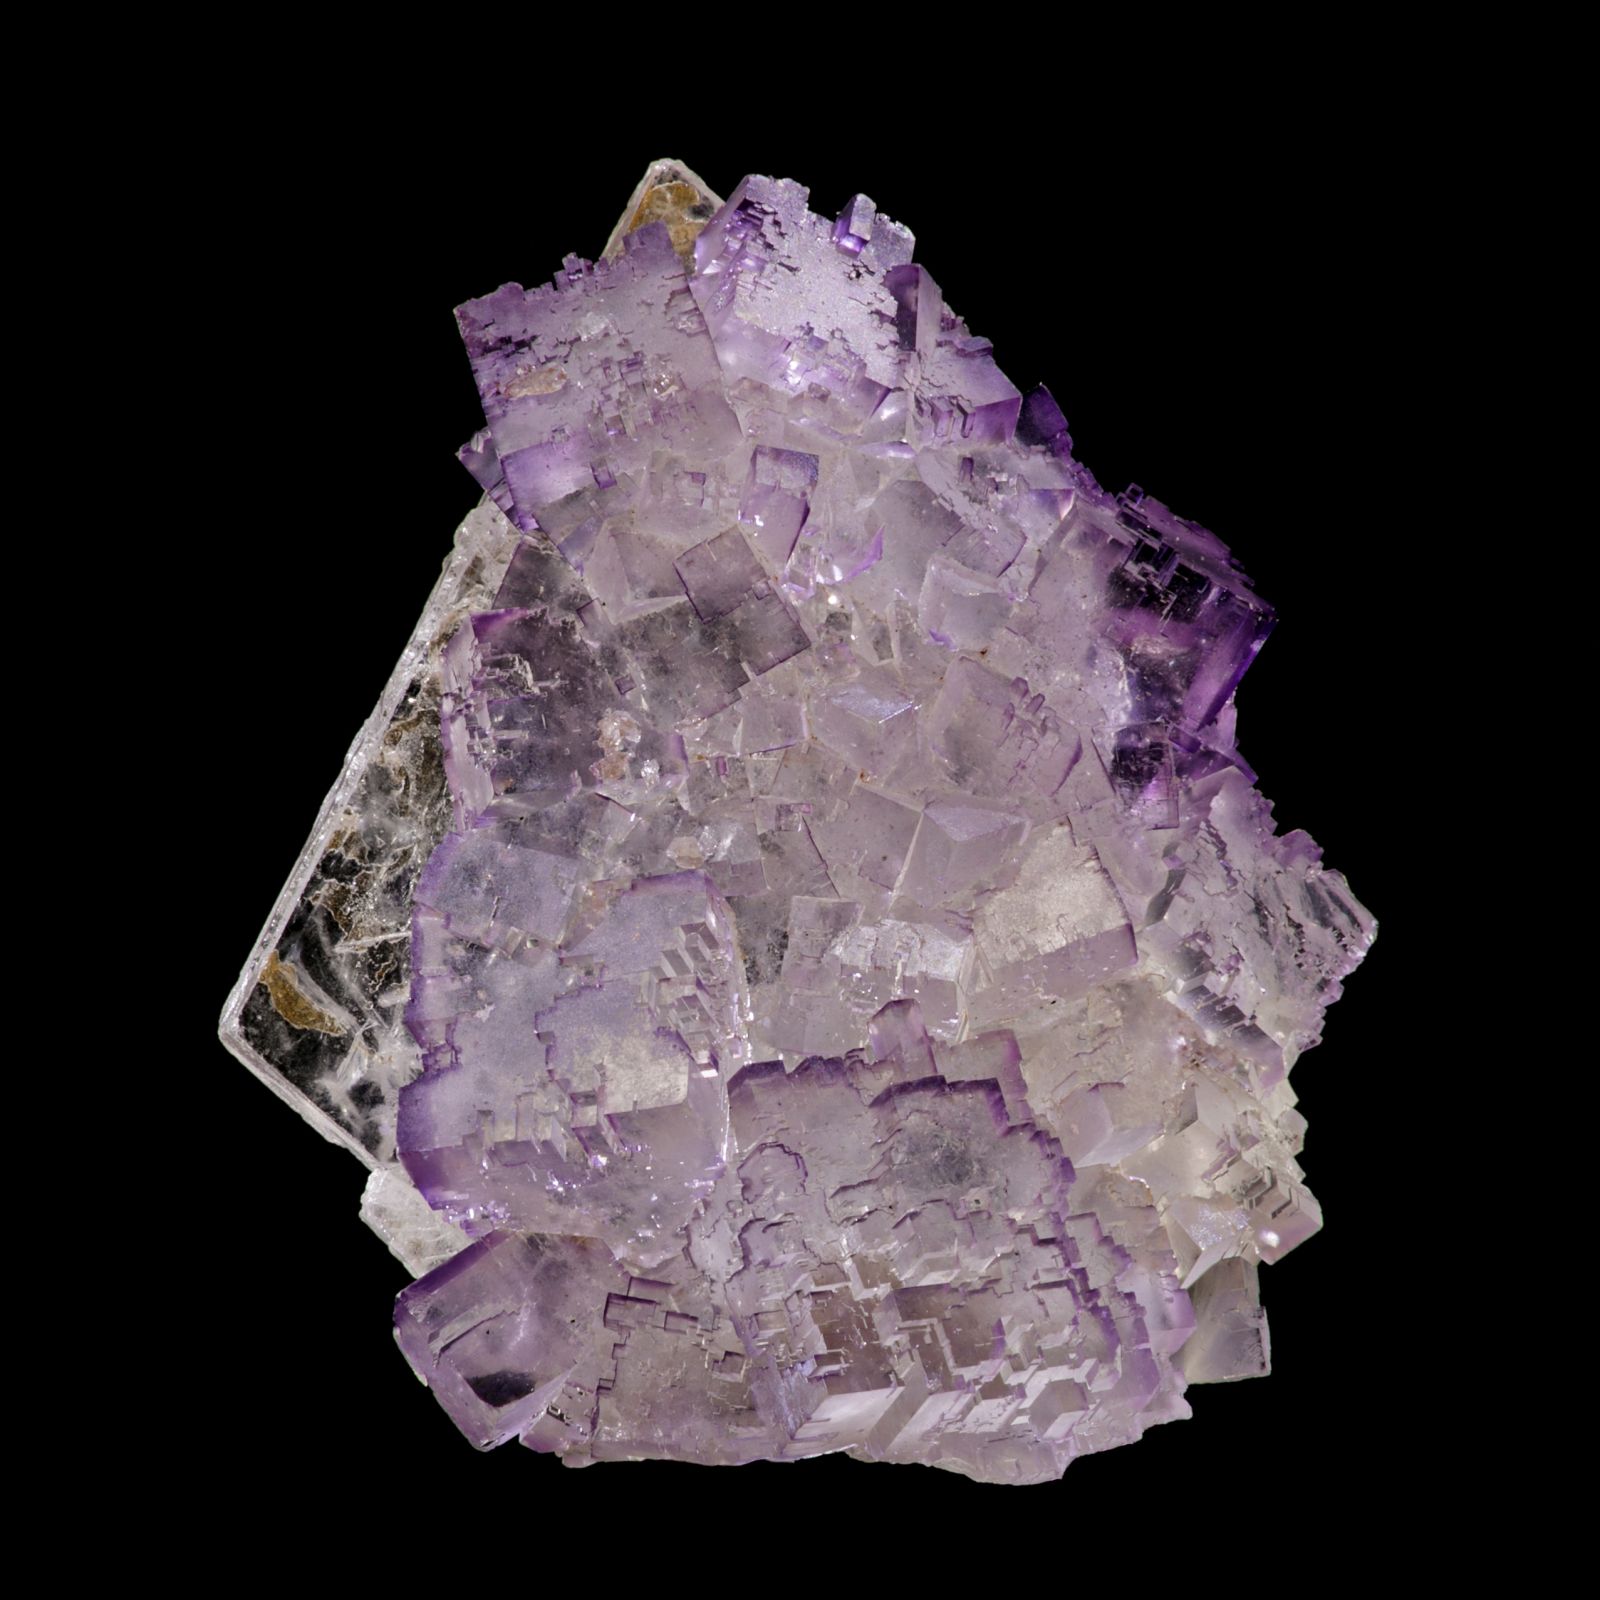 The Ruben Avila Collection Mineral Specimens